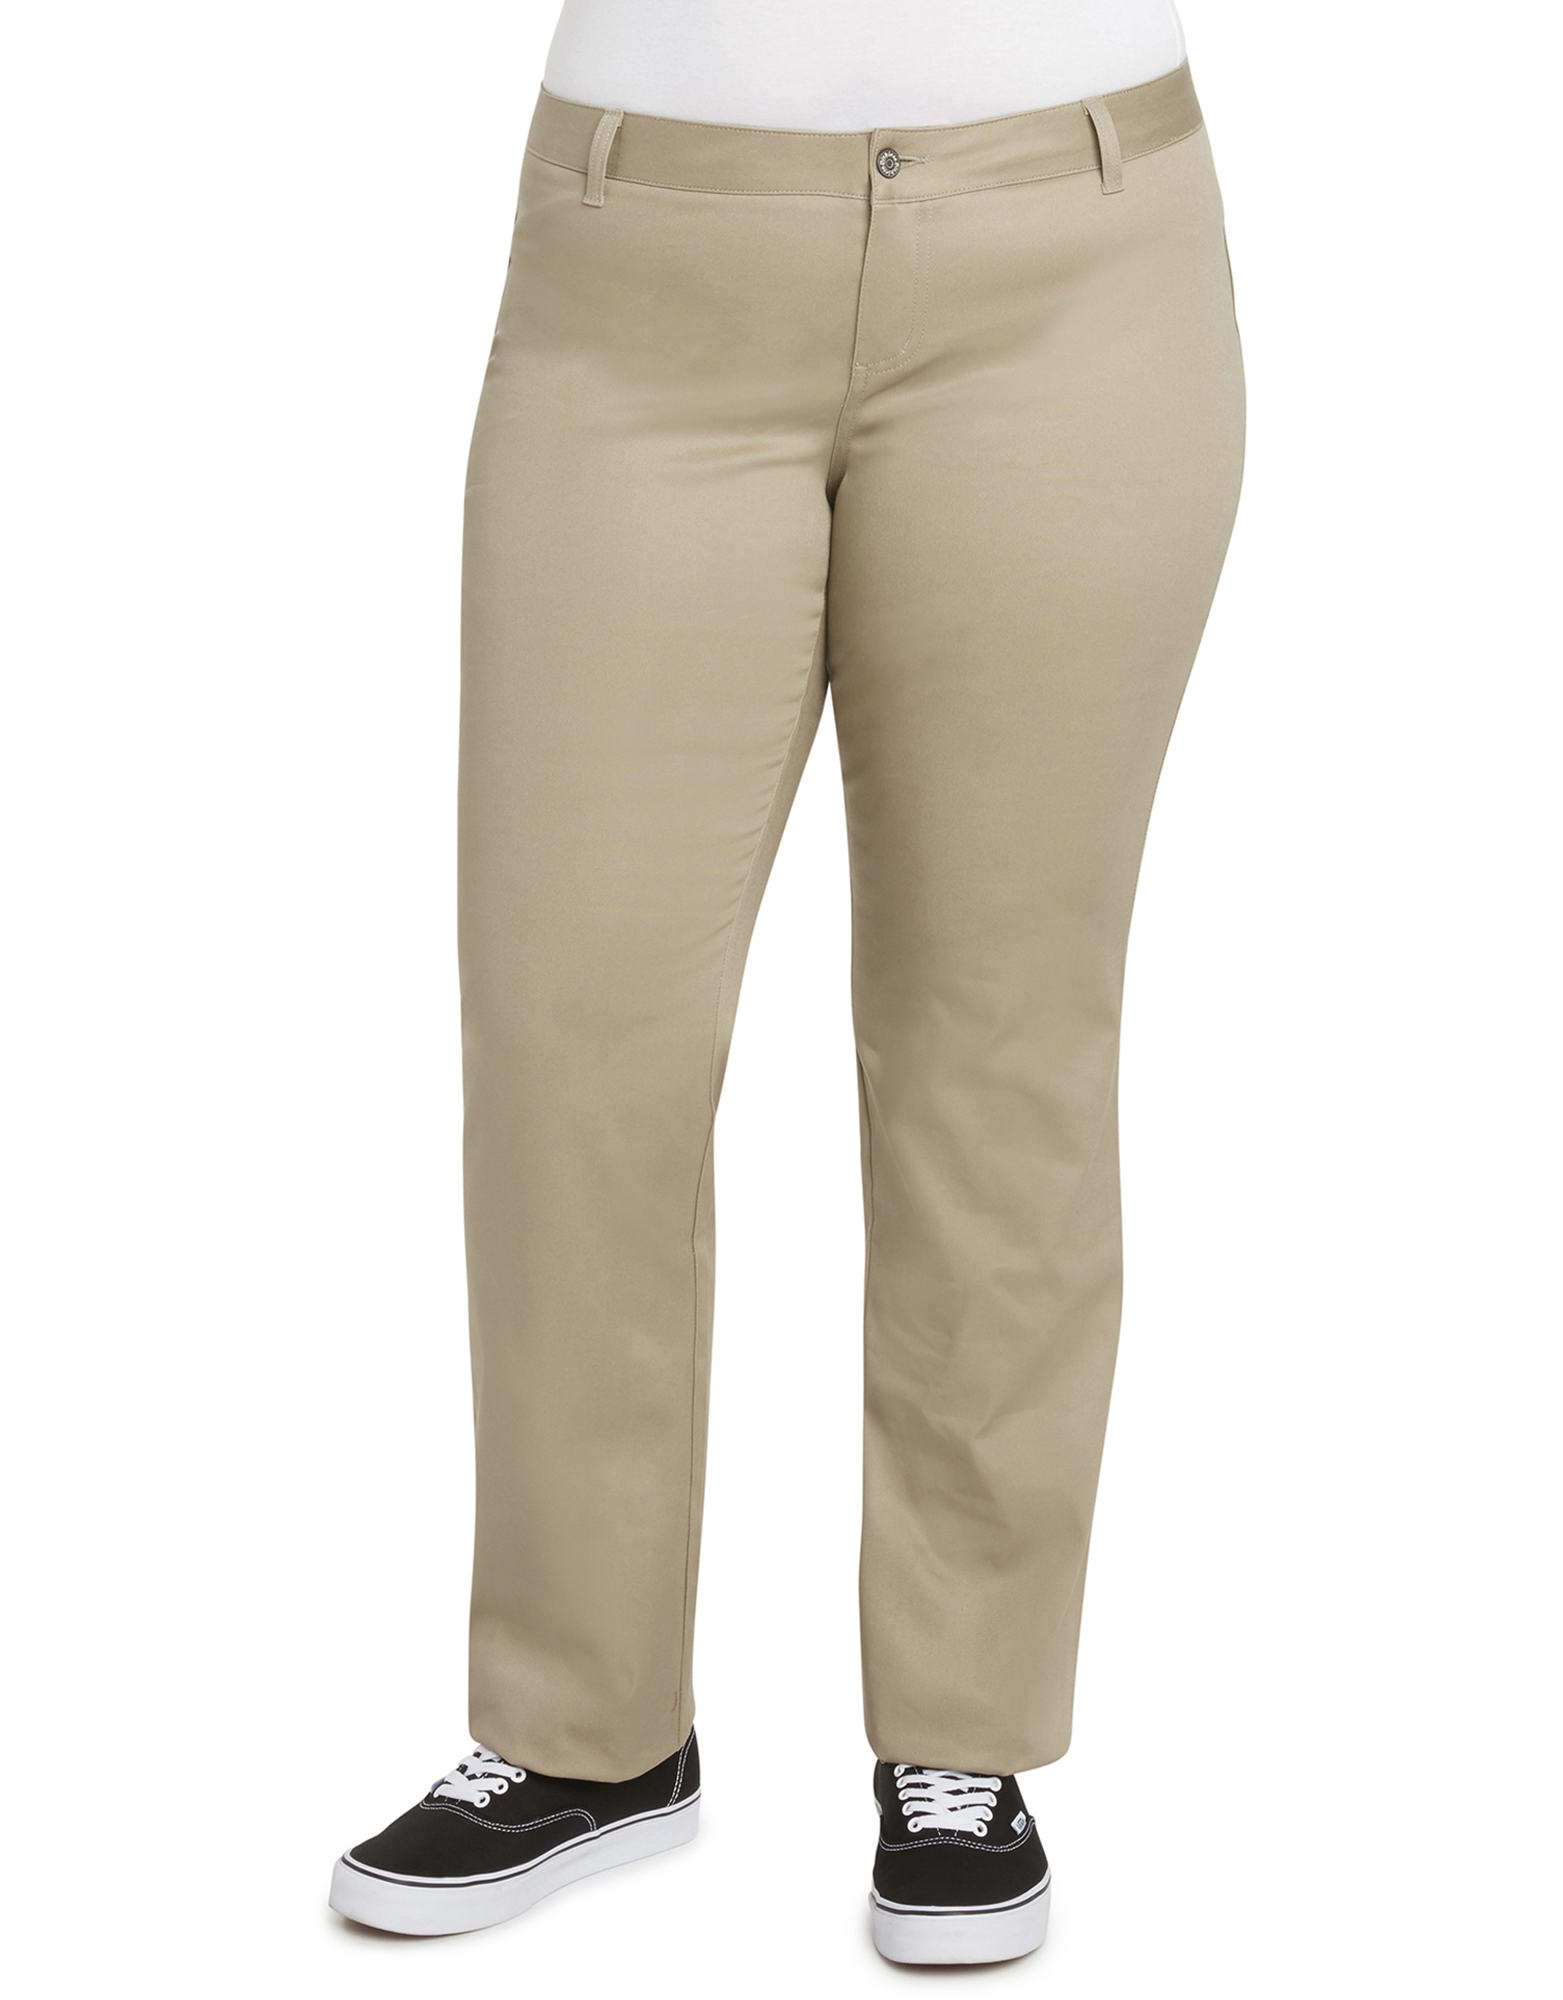 Dickies Girl Juniors' Plus Worker Pants - Khaki (KHA)